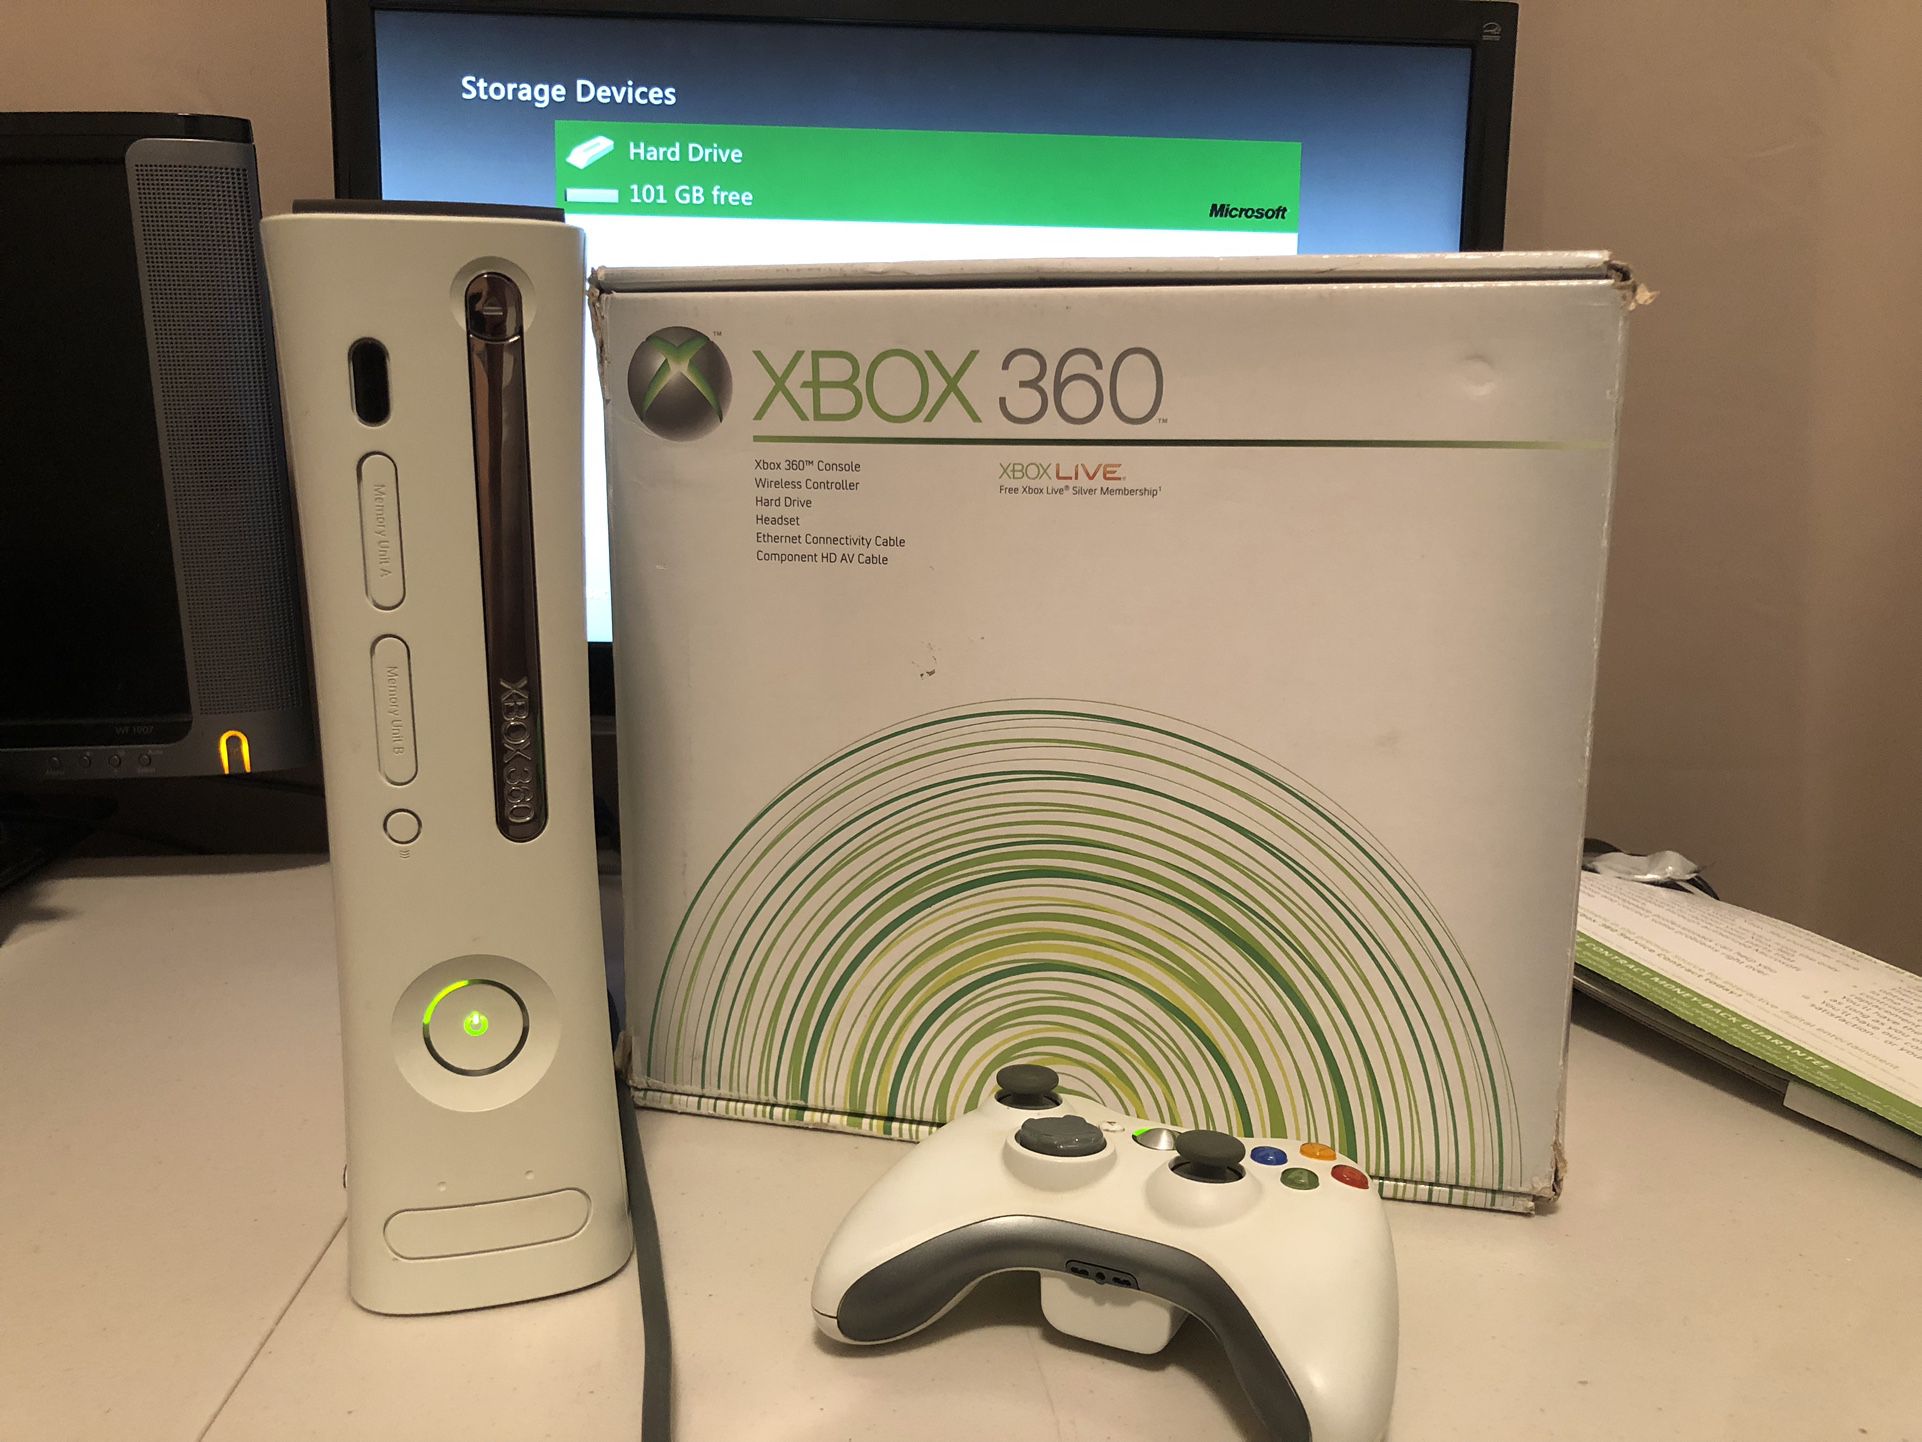 Xbox 360 System 